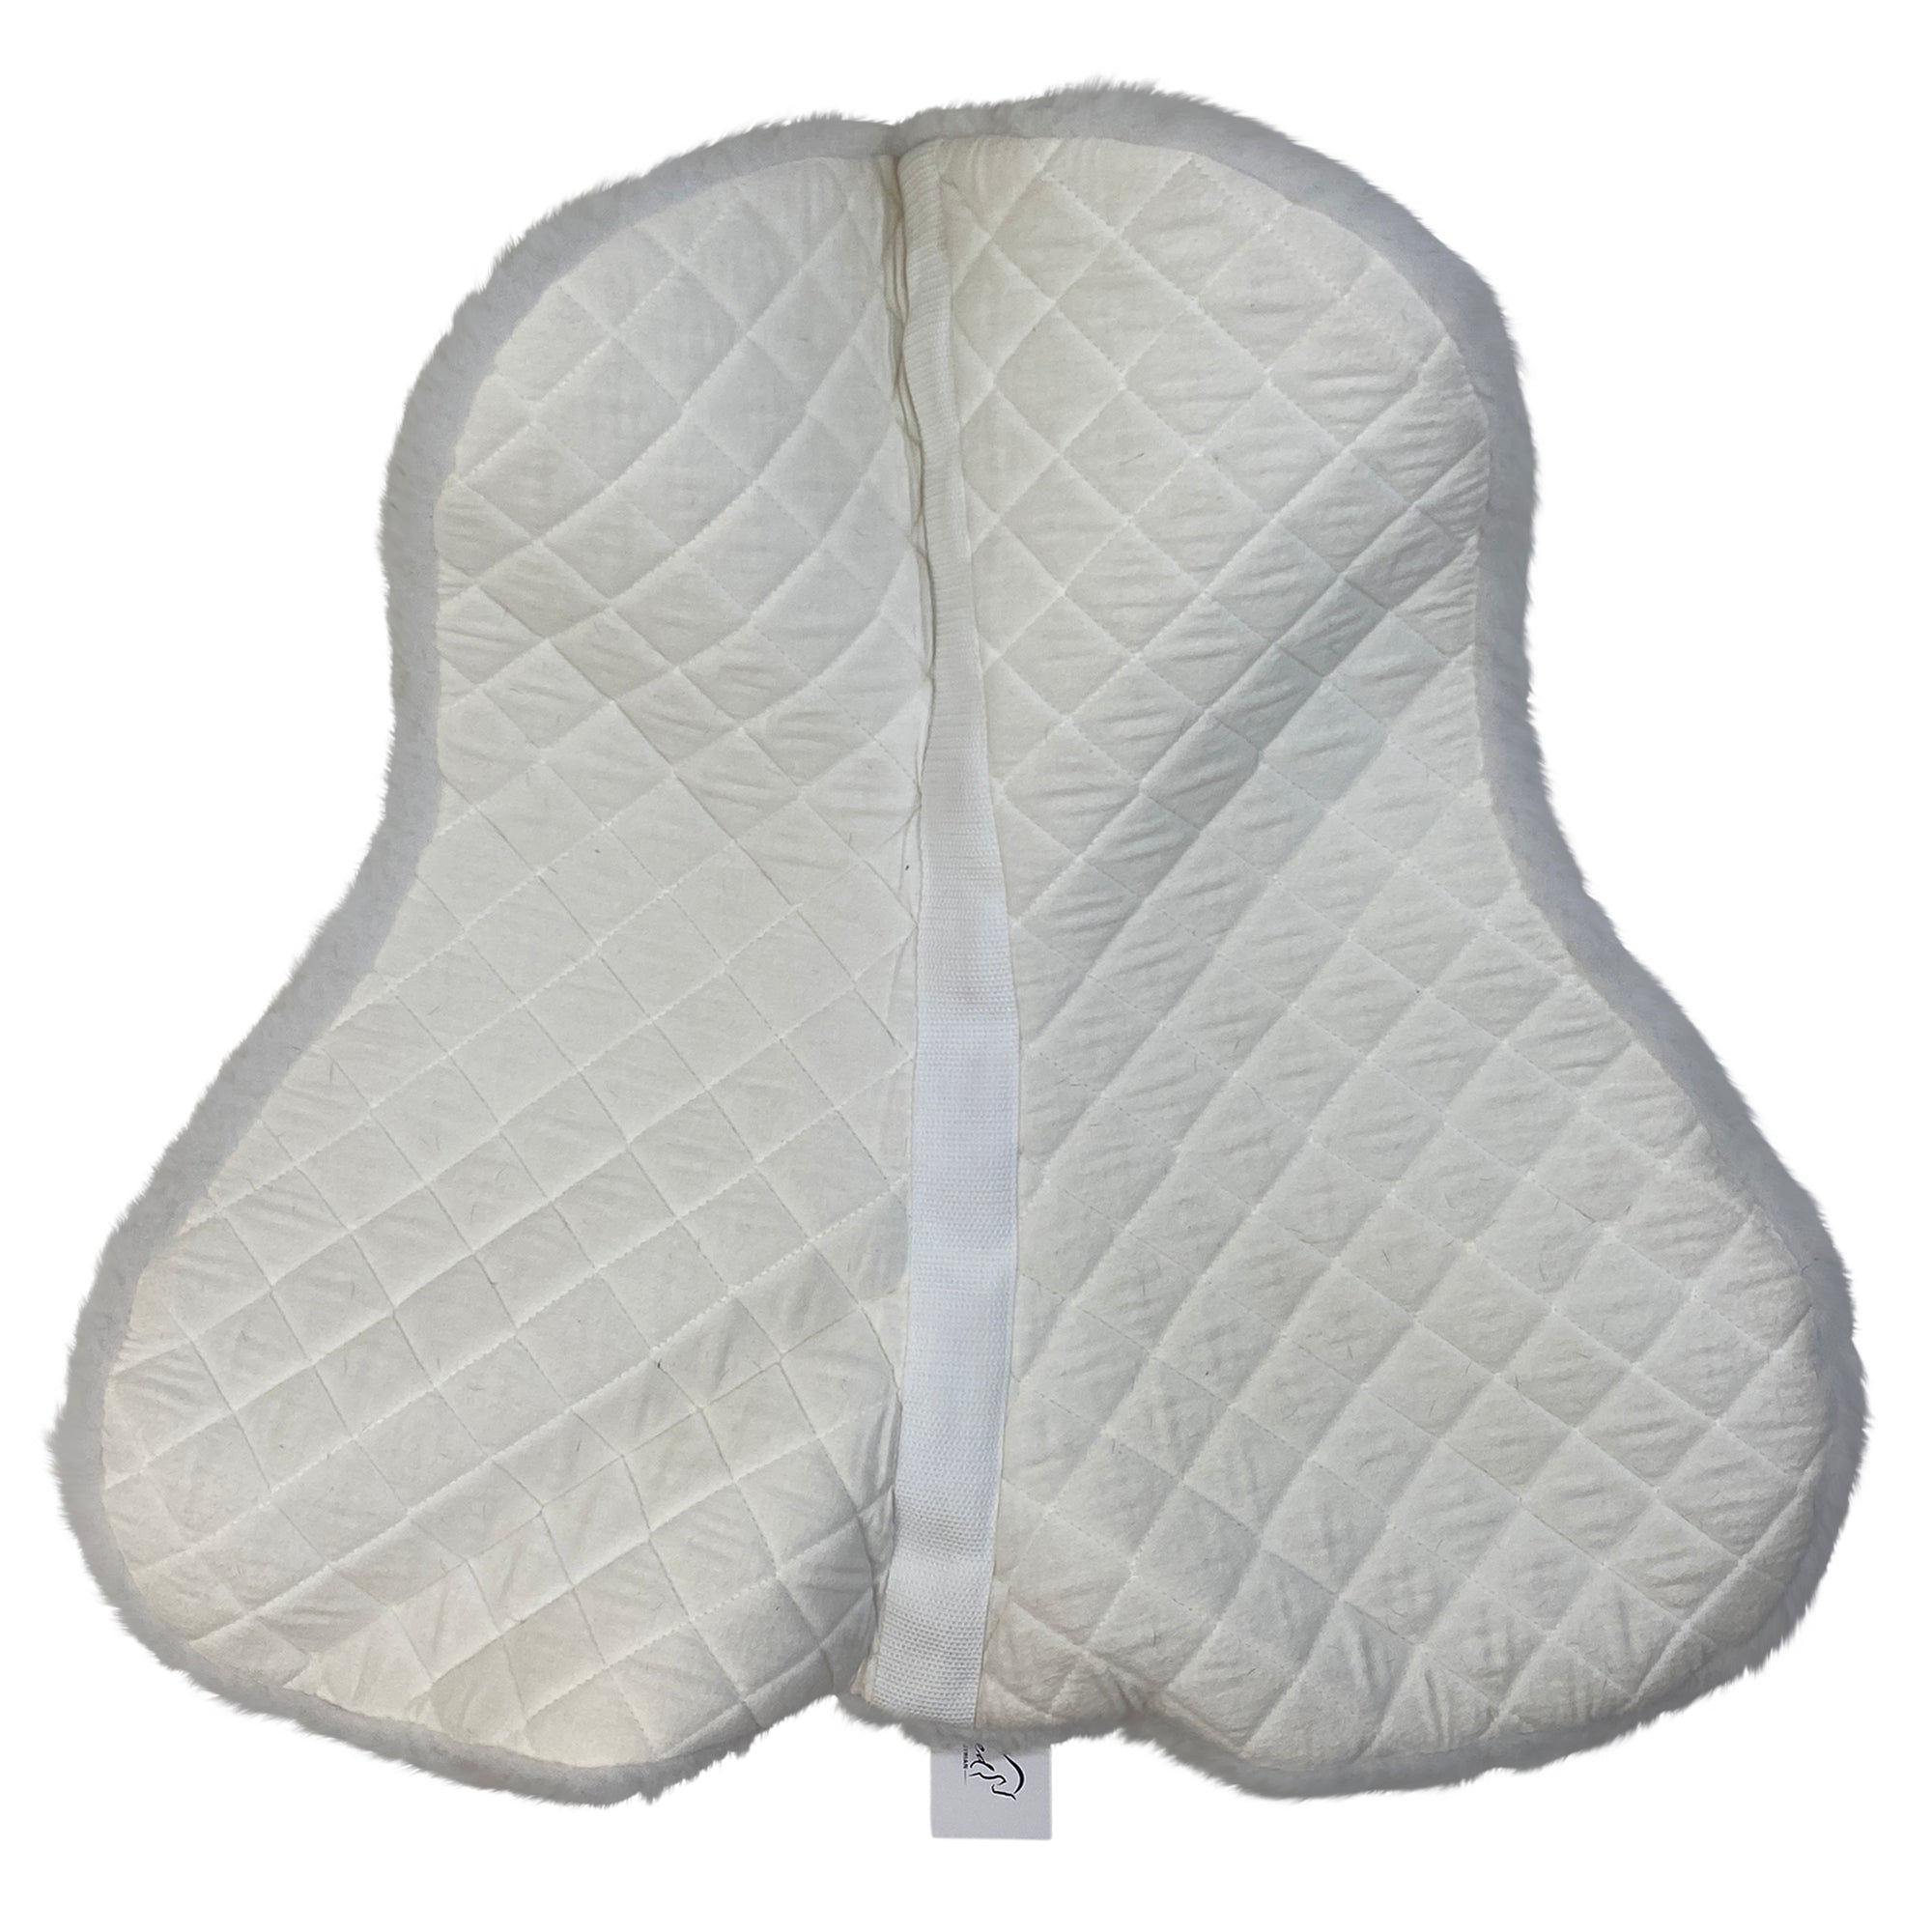 Equifit Fleece Memory Foam Half Pad Cover in White